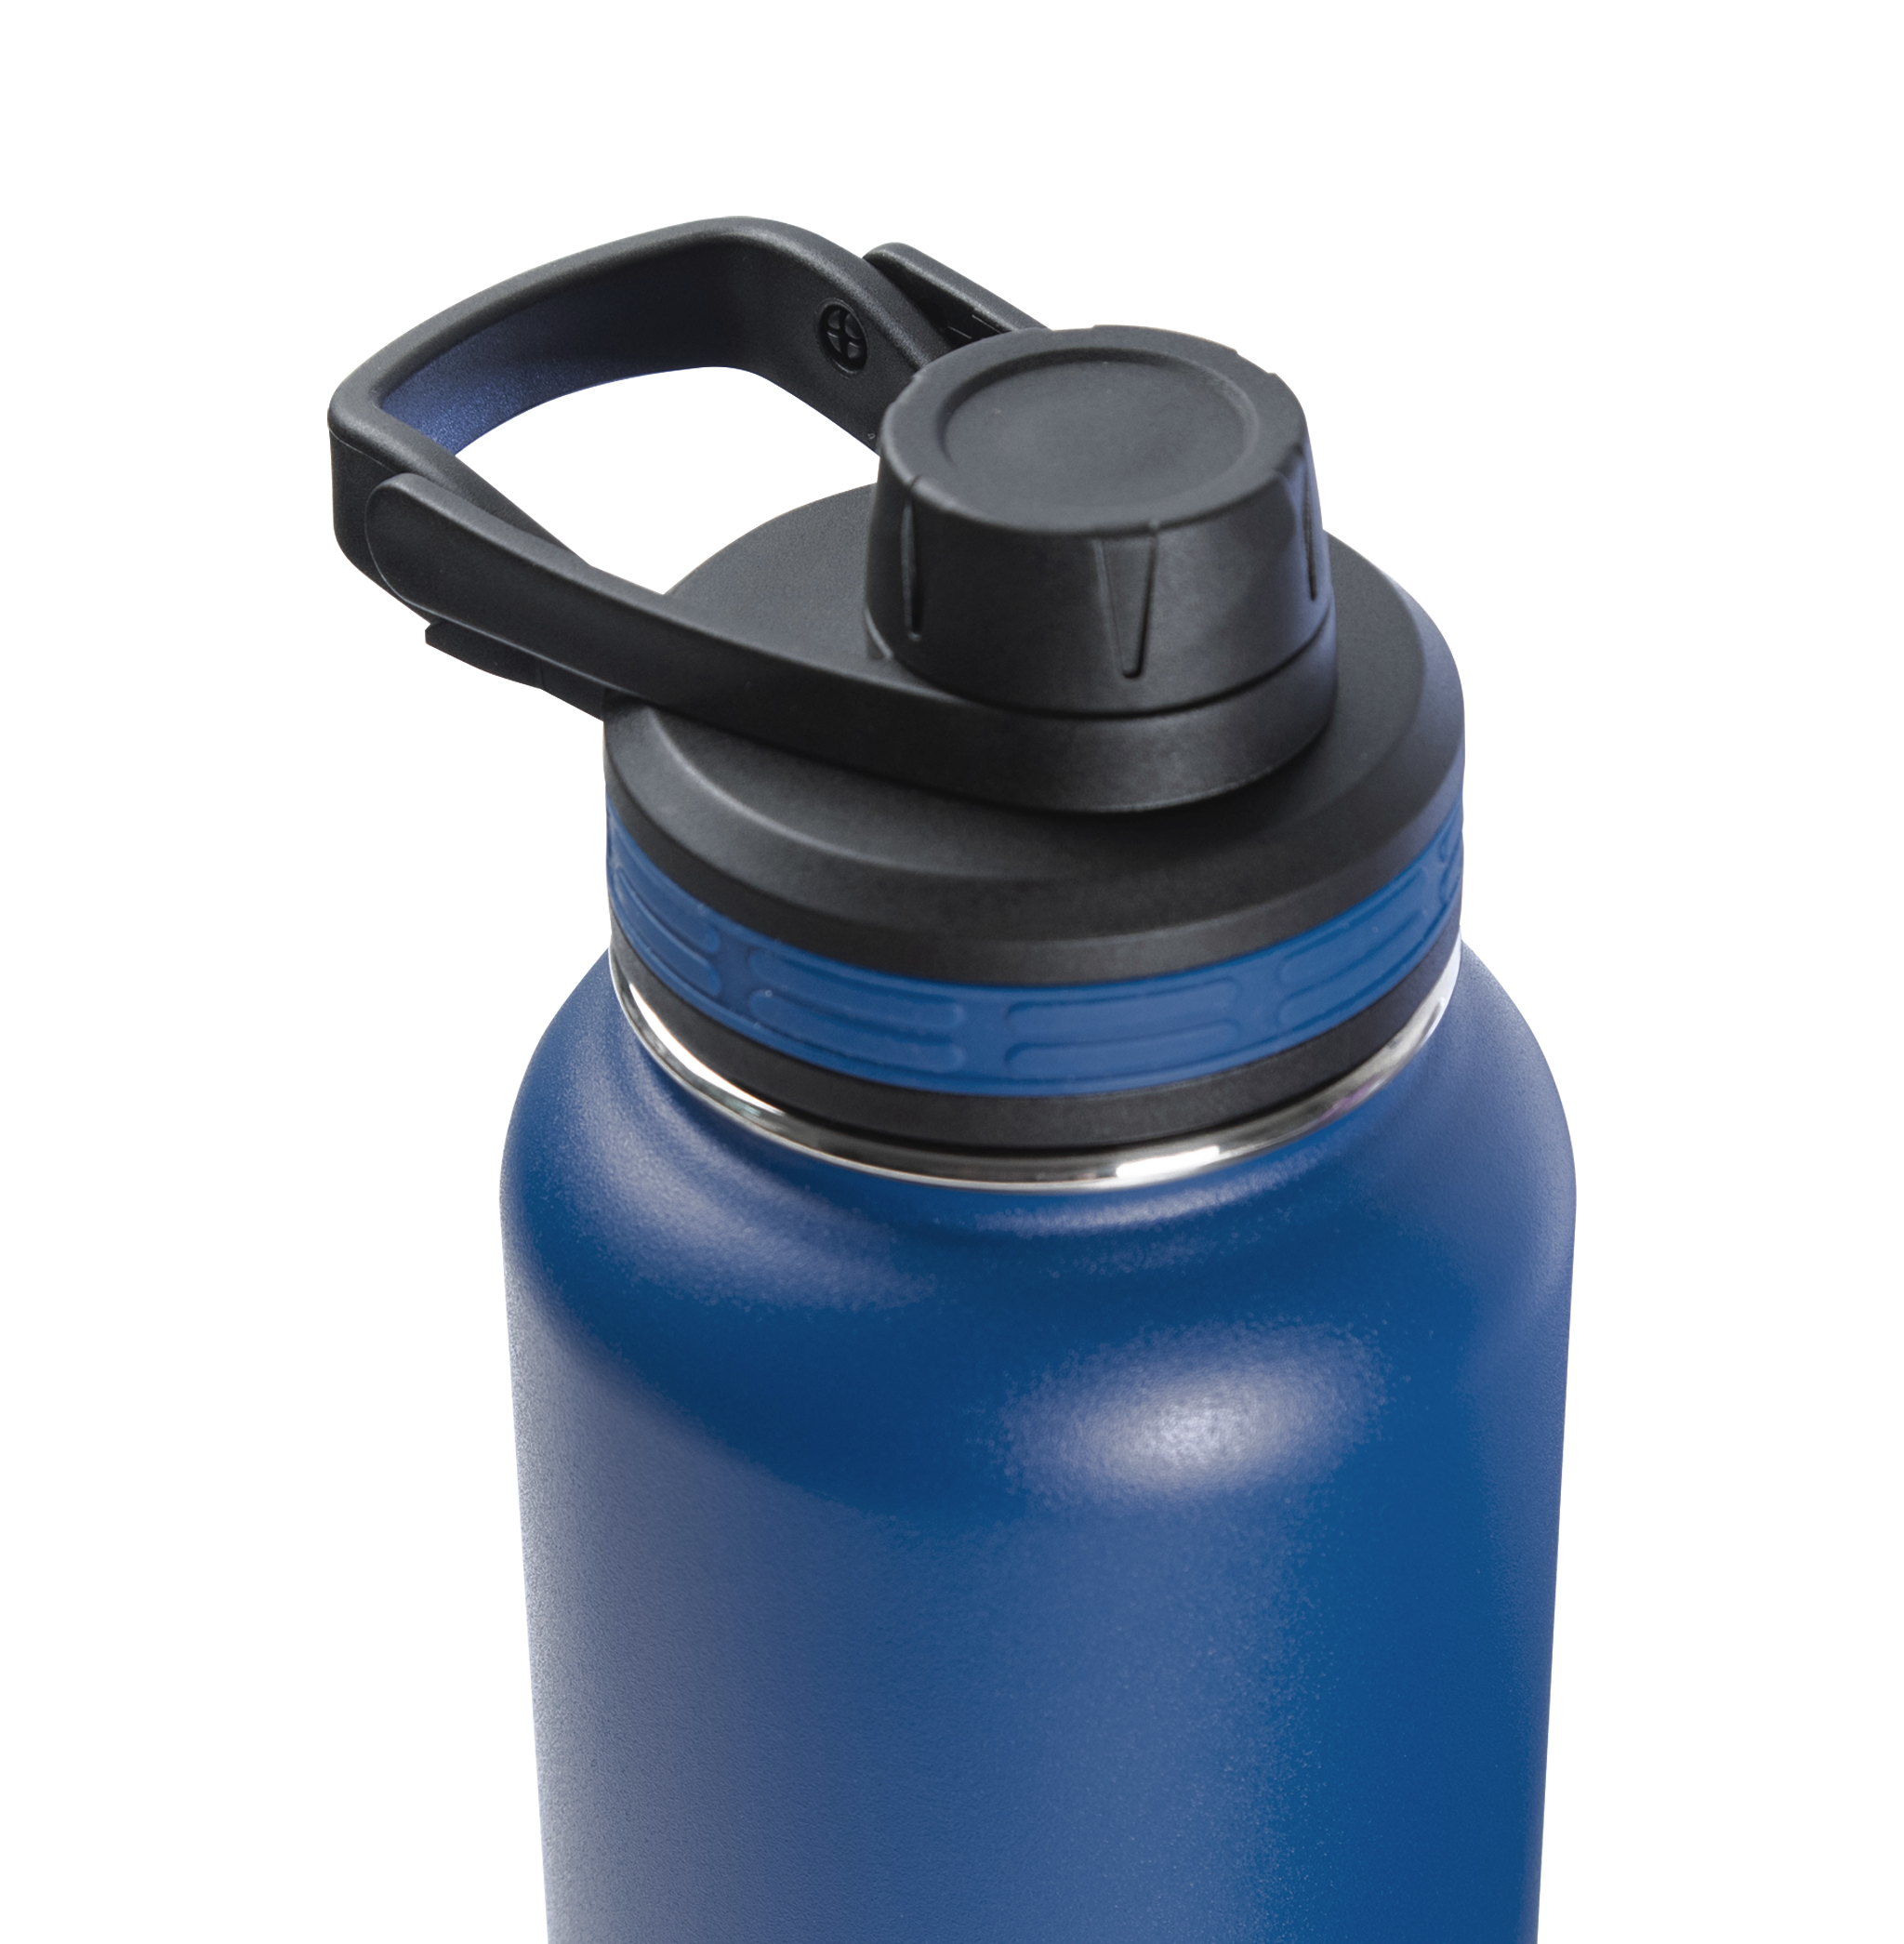 Hydro Flask 32 oz WIDE mouth WATER BOTTLE w FLEX Boot STRAW Lid CLOUD Cool  Grey